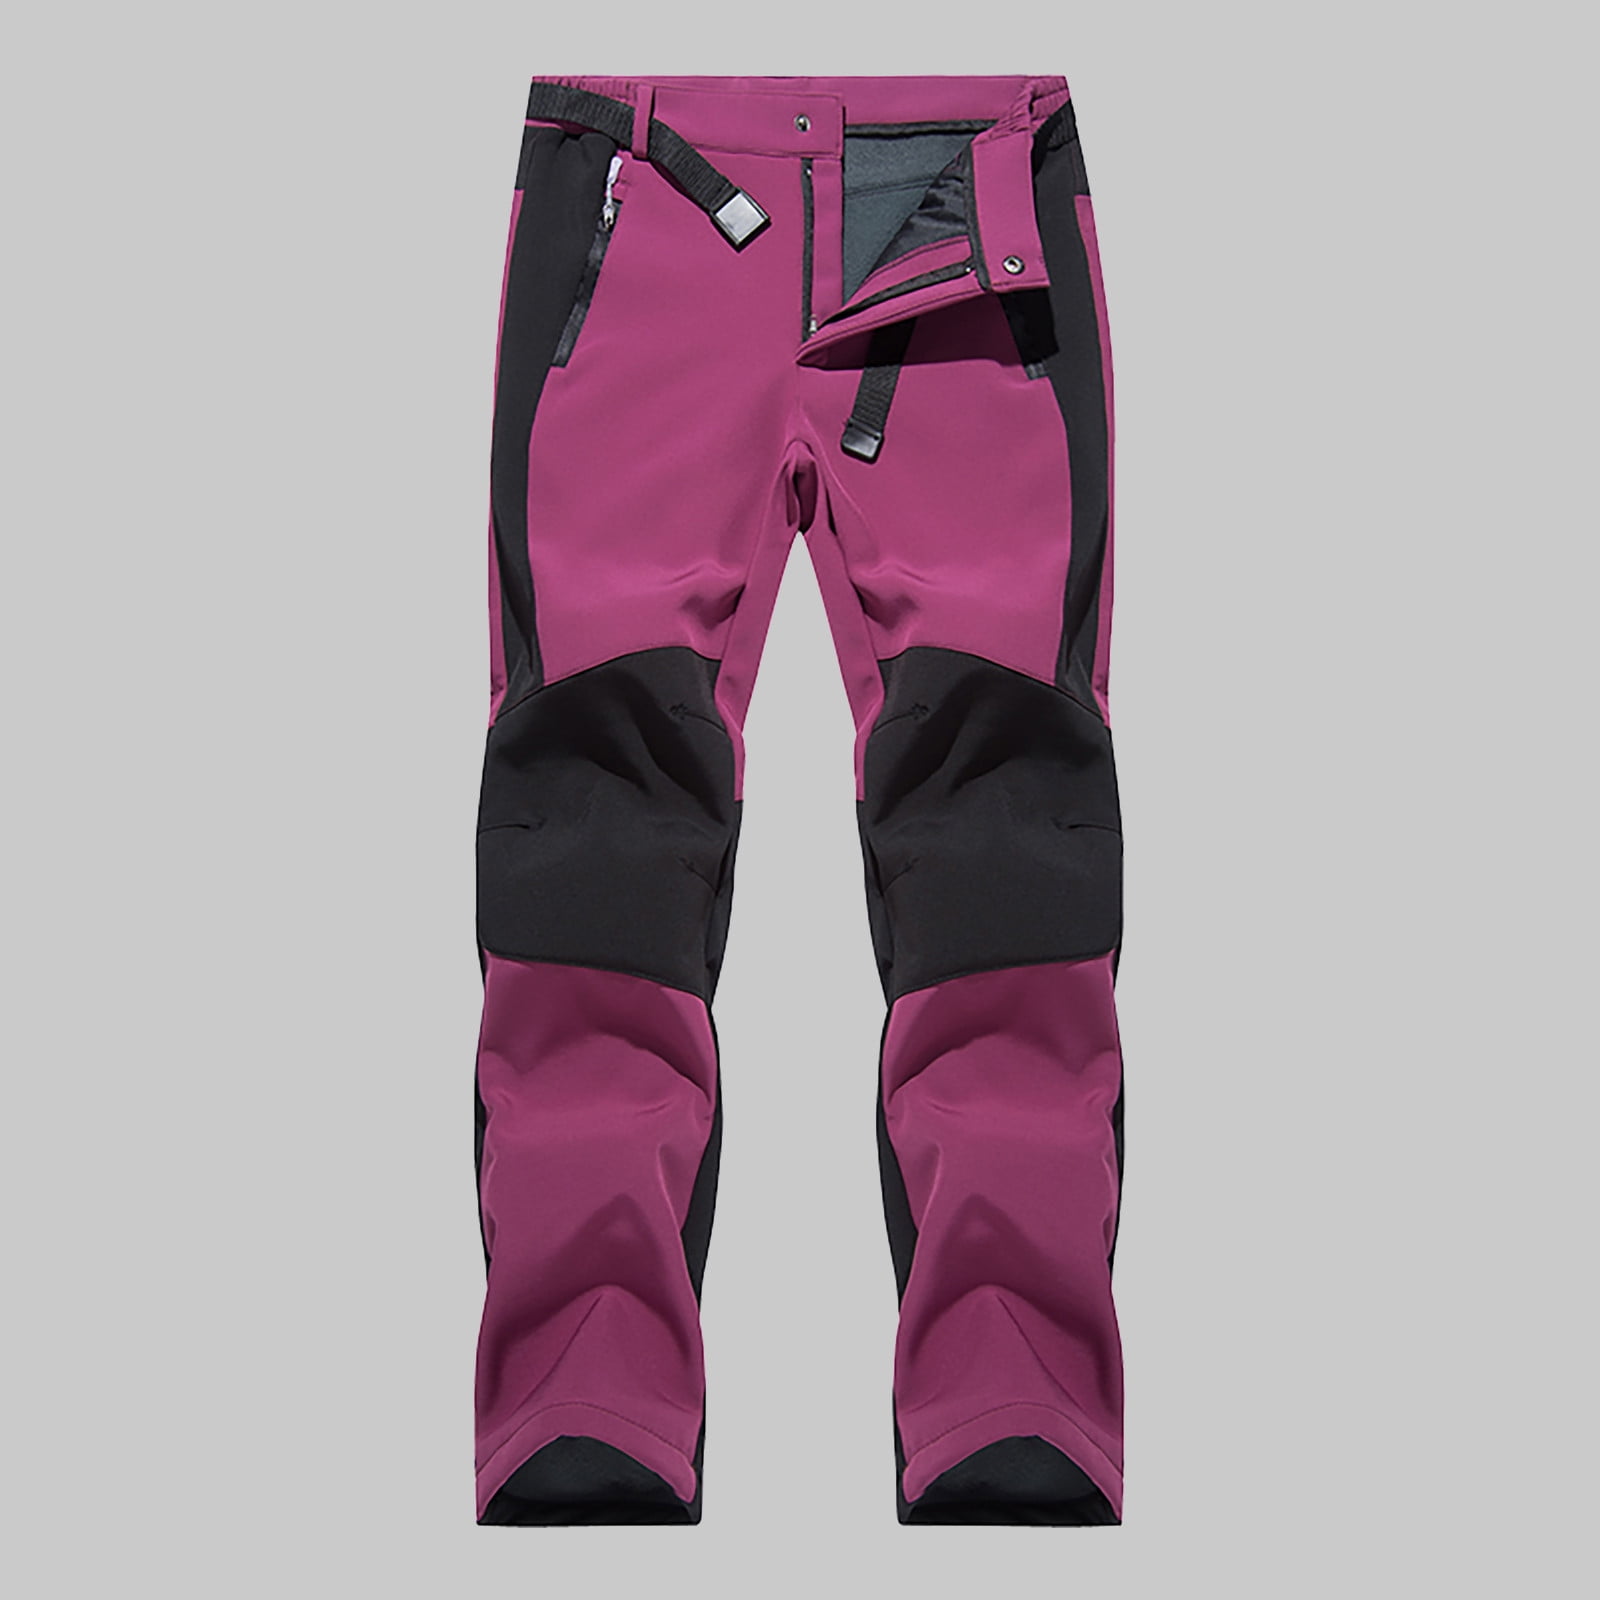 MRULIC pants for women Womens Ski Snow Pants Waterproof Quick Dry ...